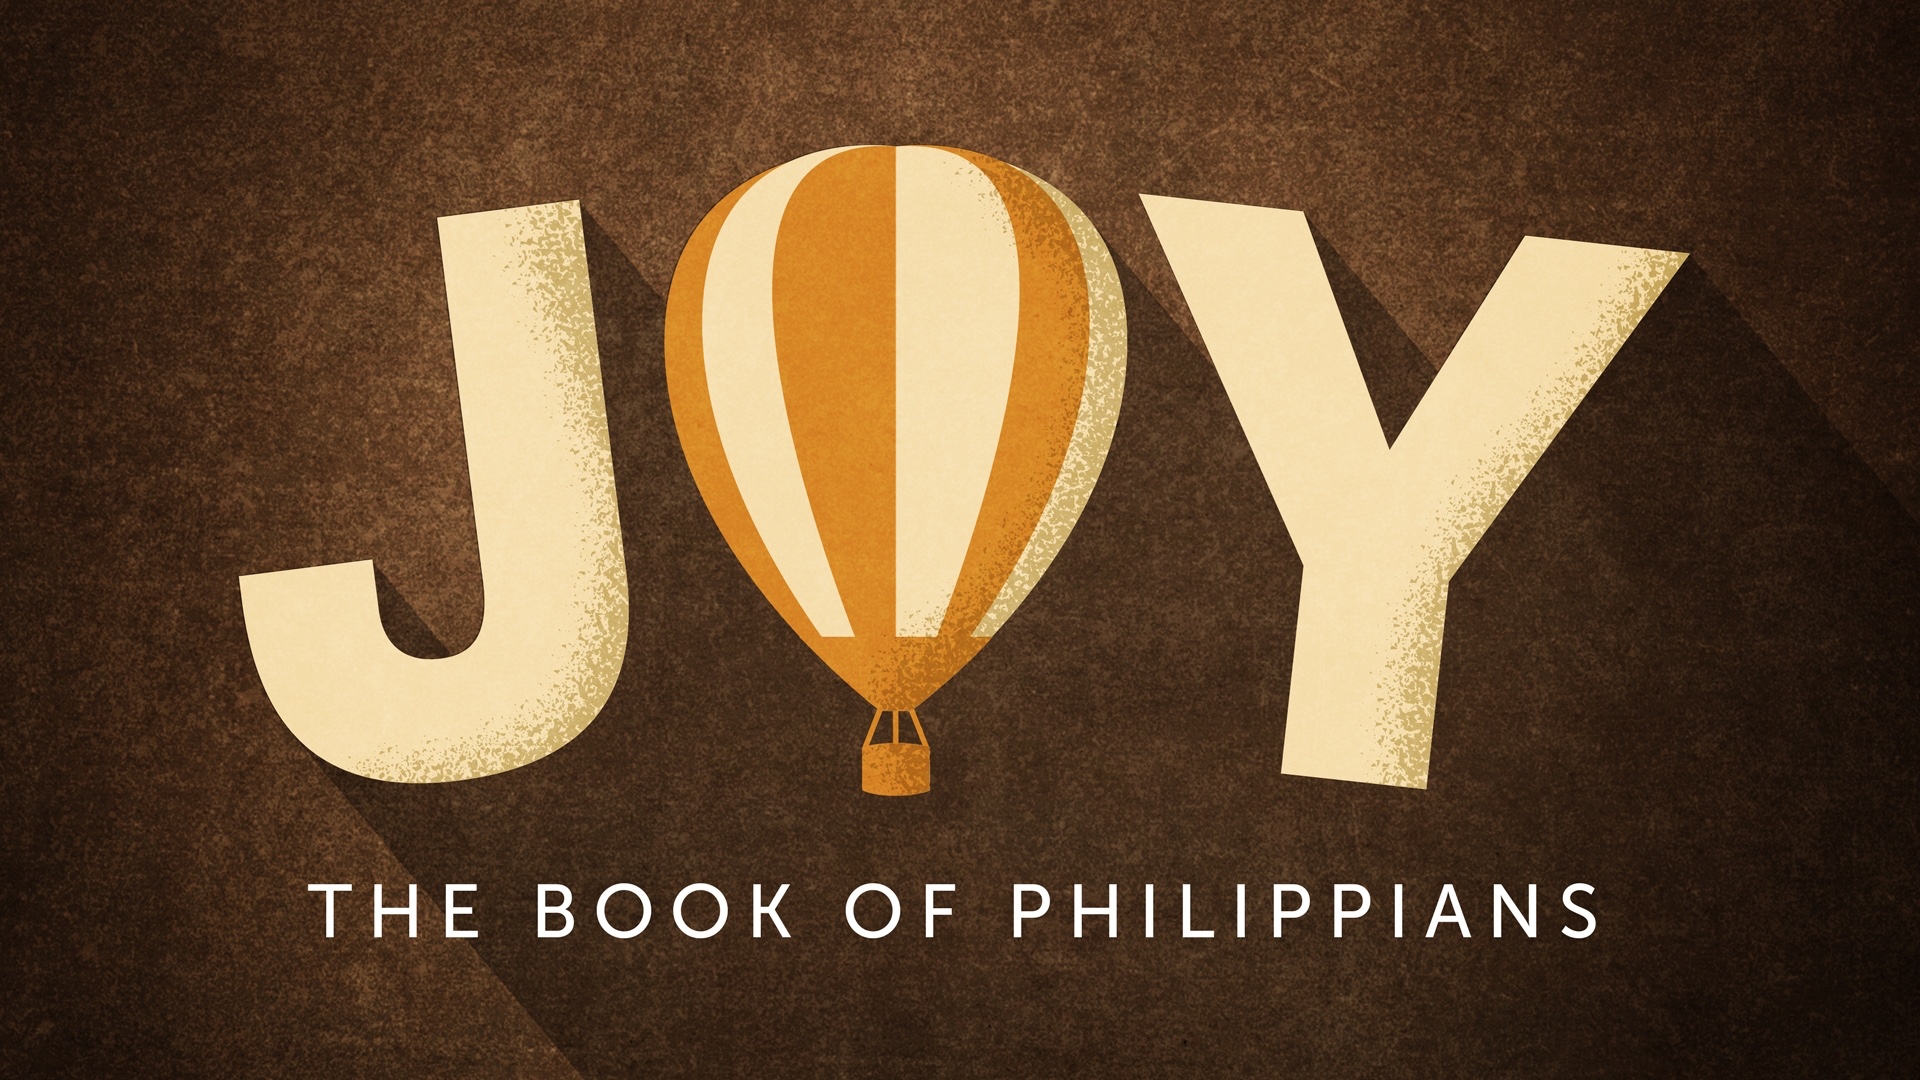 Joy: the Book of Philippians - Finding Joy in Suffering